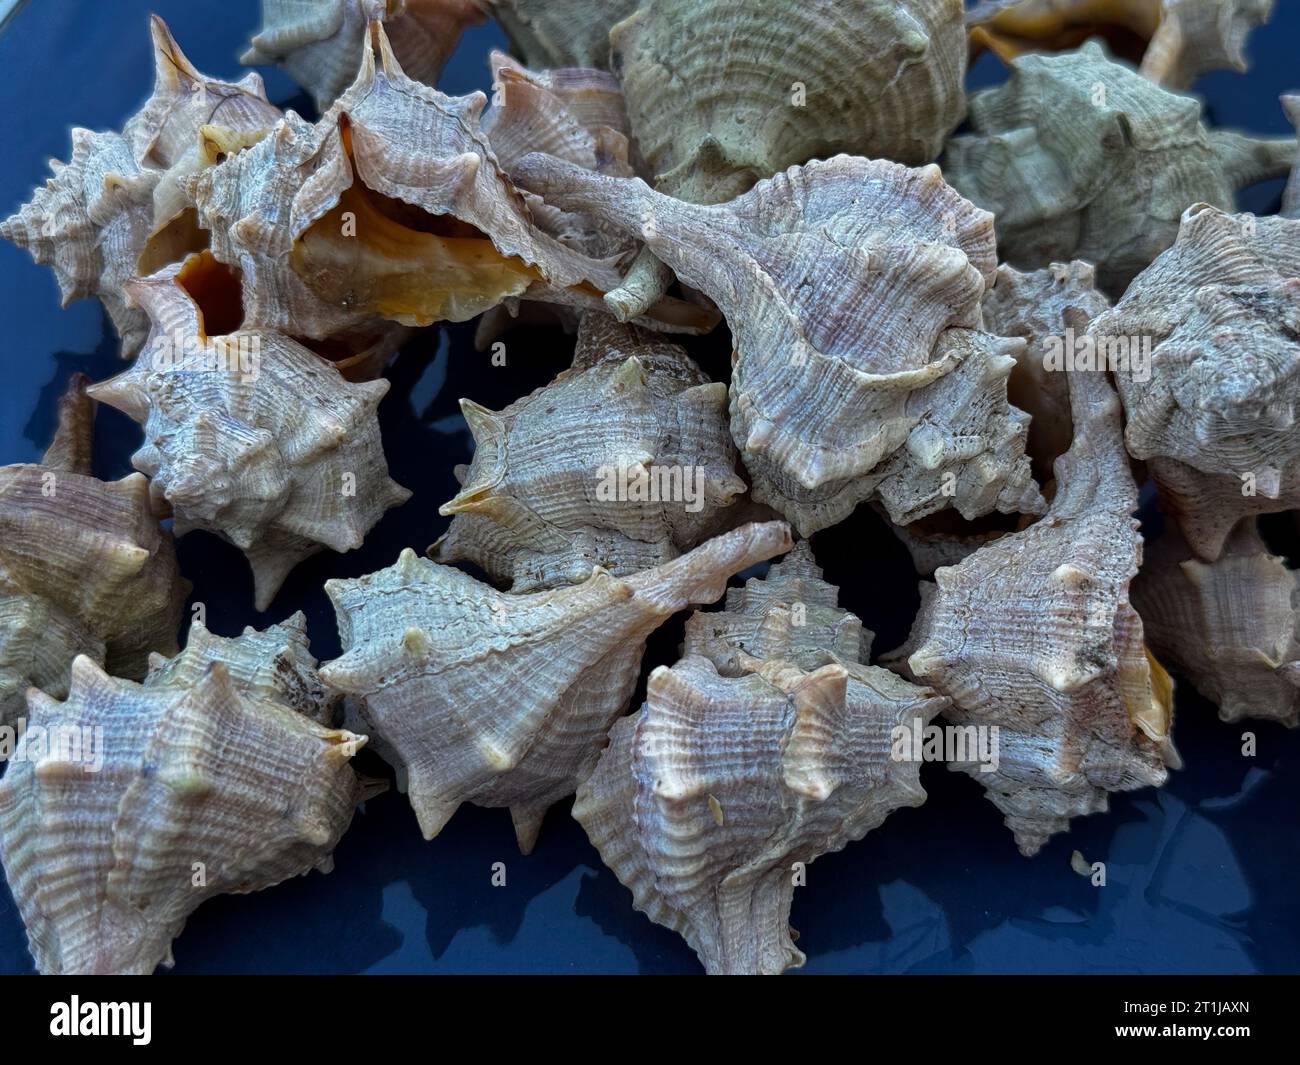 Bolinus brandaris or murici, Plate of seafood morsels with lemon, boiled sea snails, Mediterranean Food Stock Photo